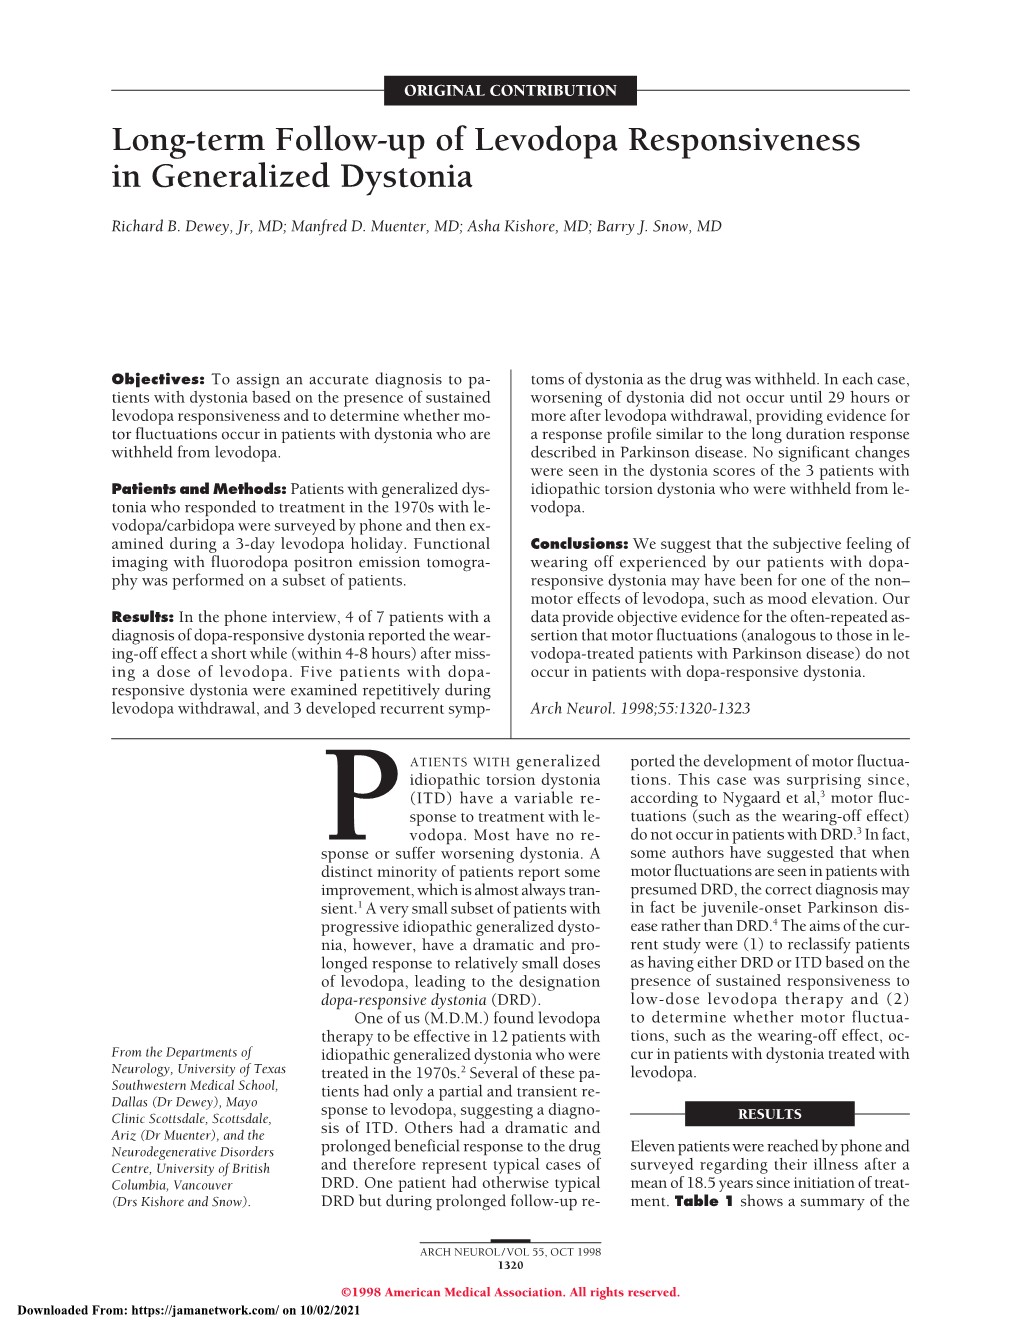 Long-Term Follow-Up of Levodopa Responsiveness in Generalized Dystonia